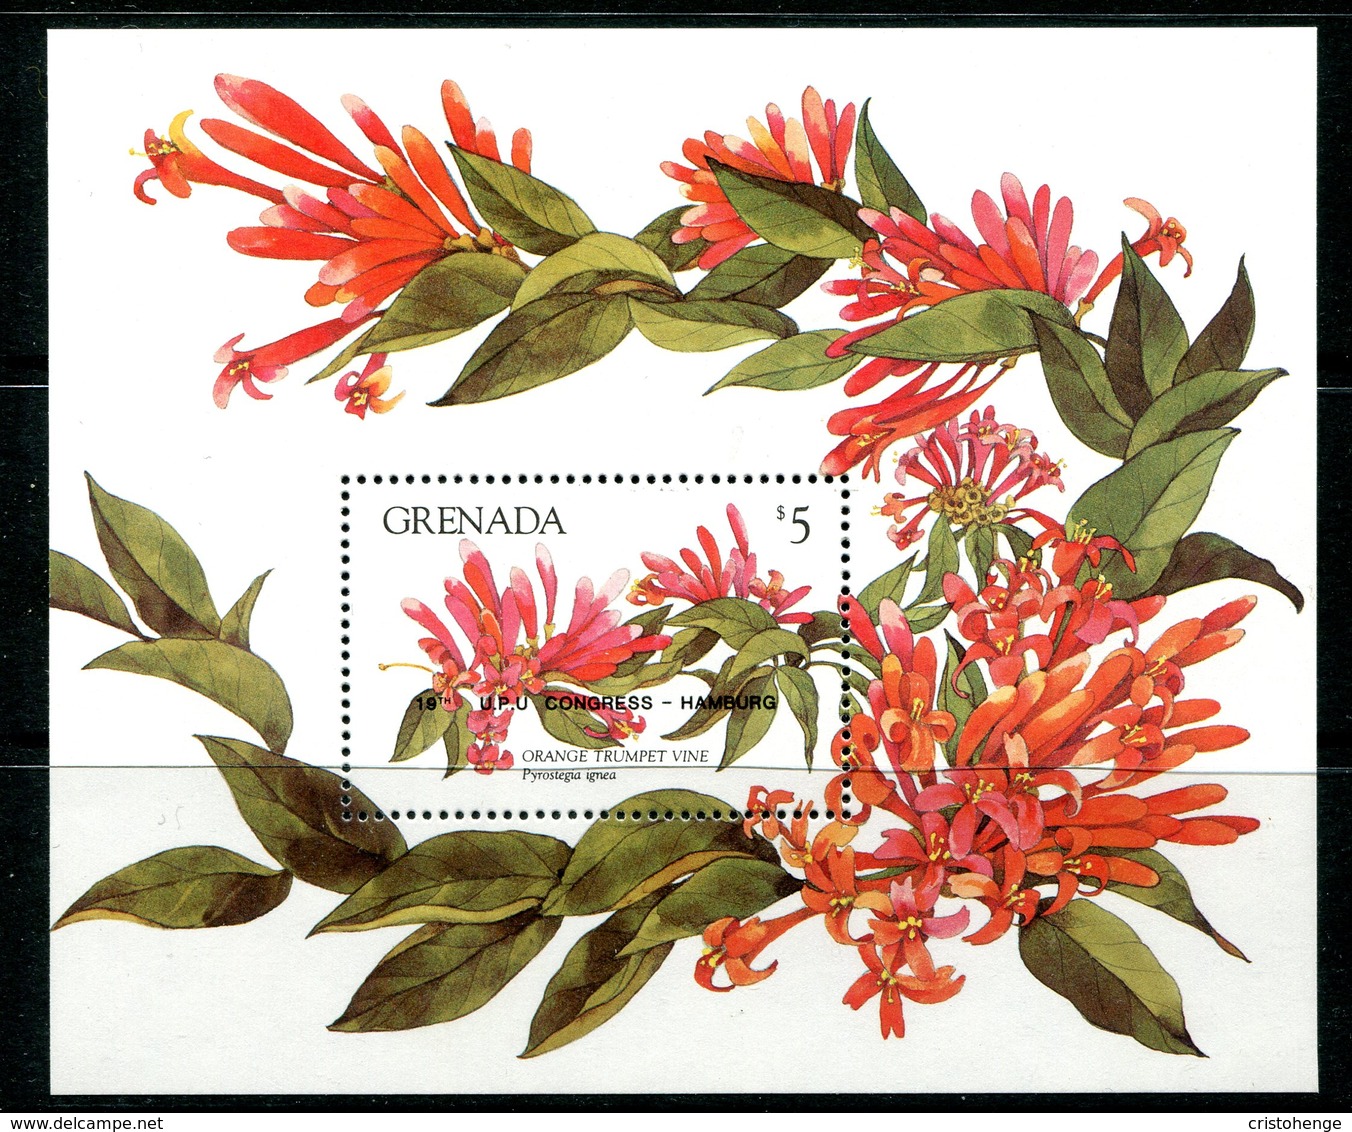 Grenada 1984 UPU Congress, Hamburg - Flowers Overprint MS MNH (SG MS1341) - Grenada (1974-...)